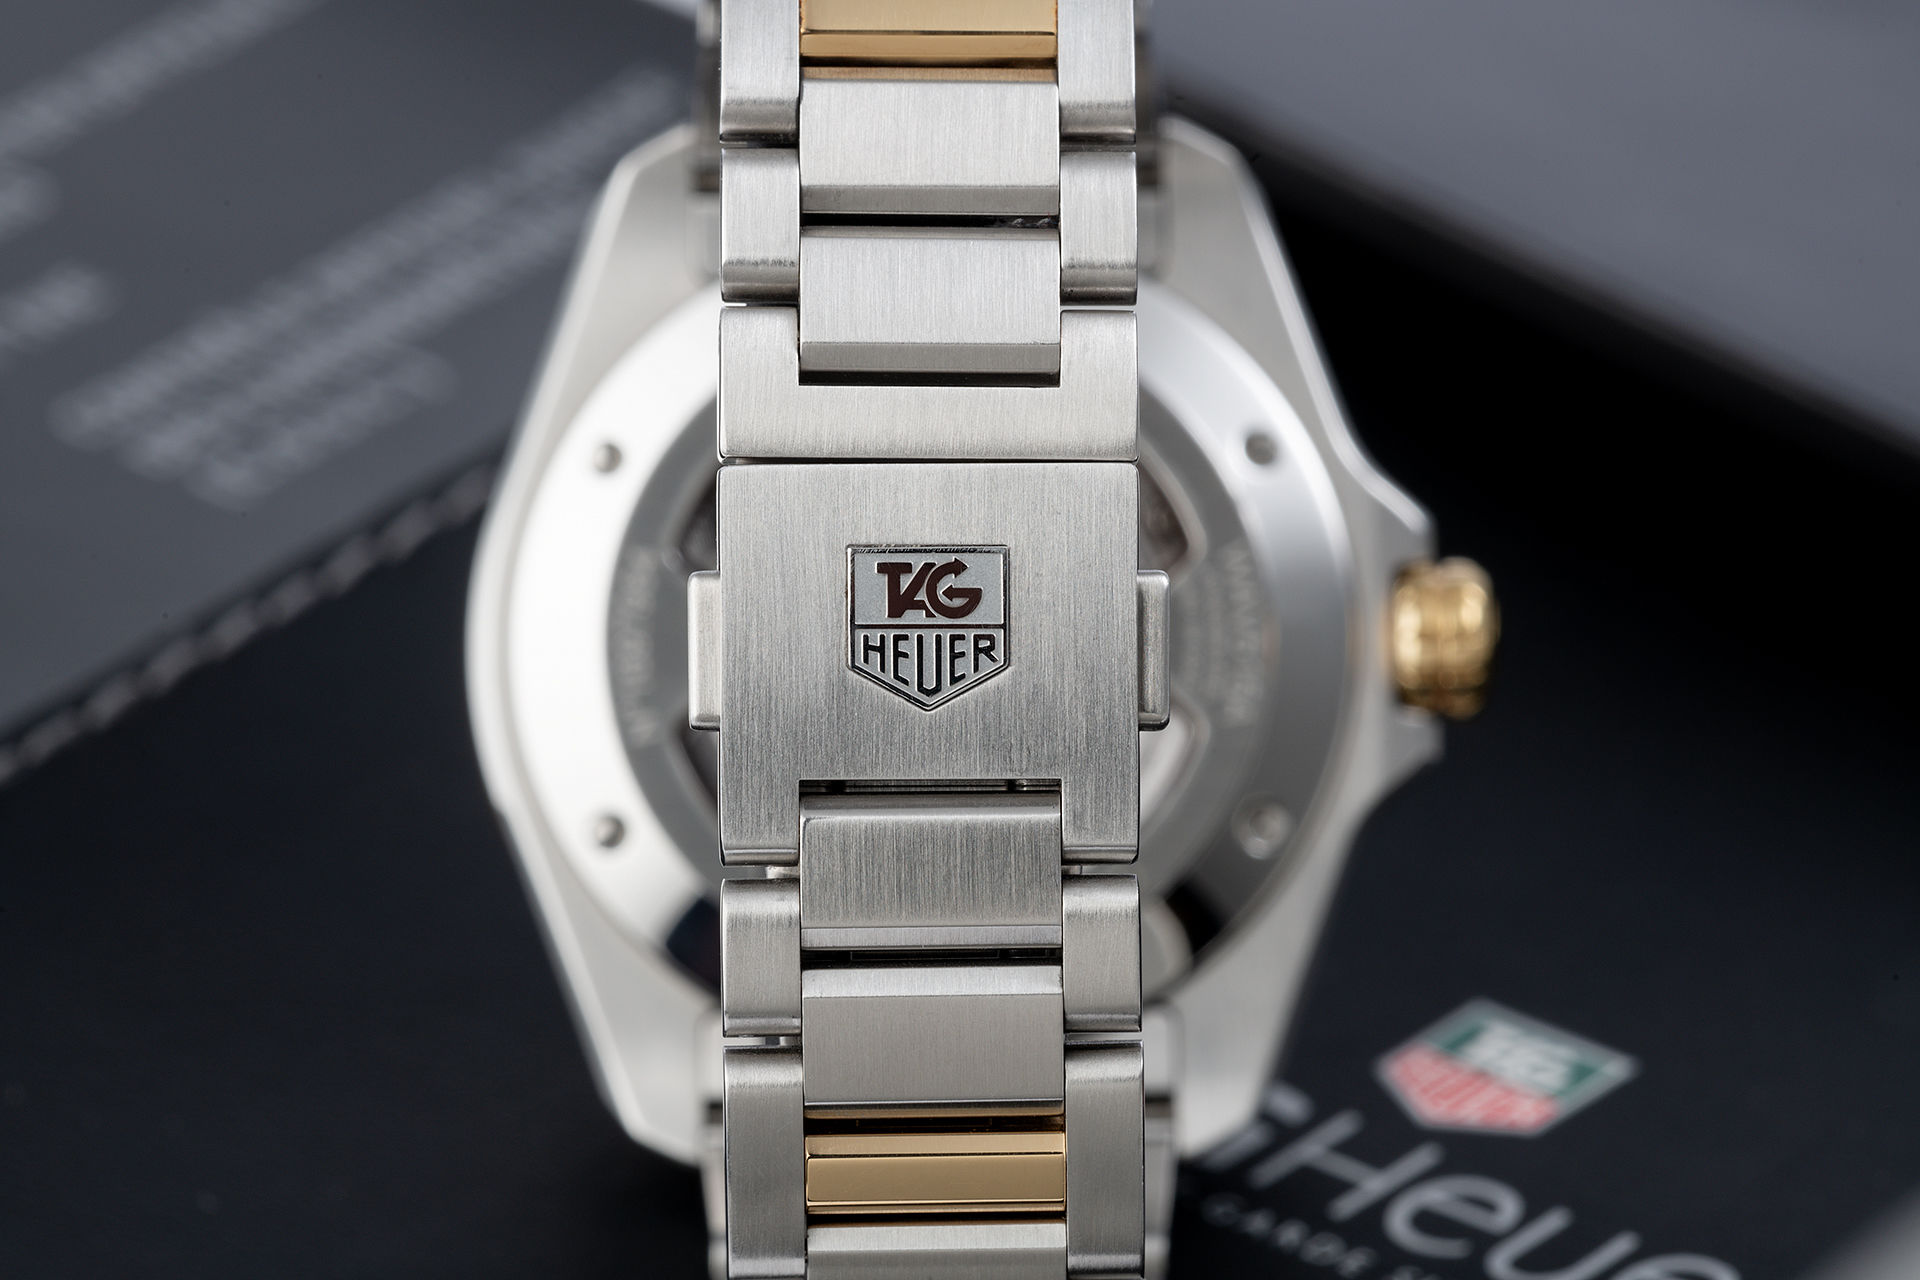 Tag Heuer Grand Carrera Watches, ref WAV515A